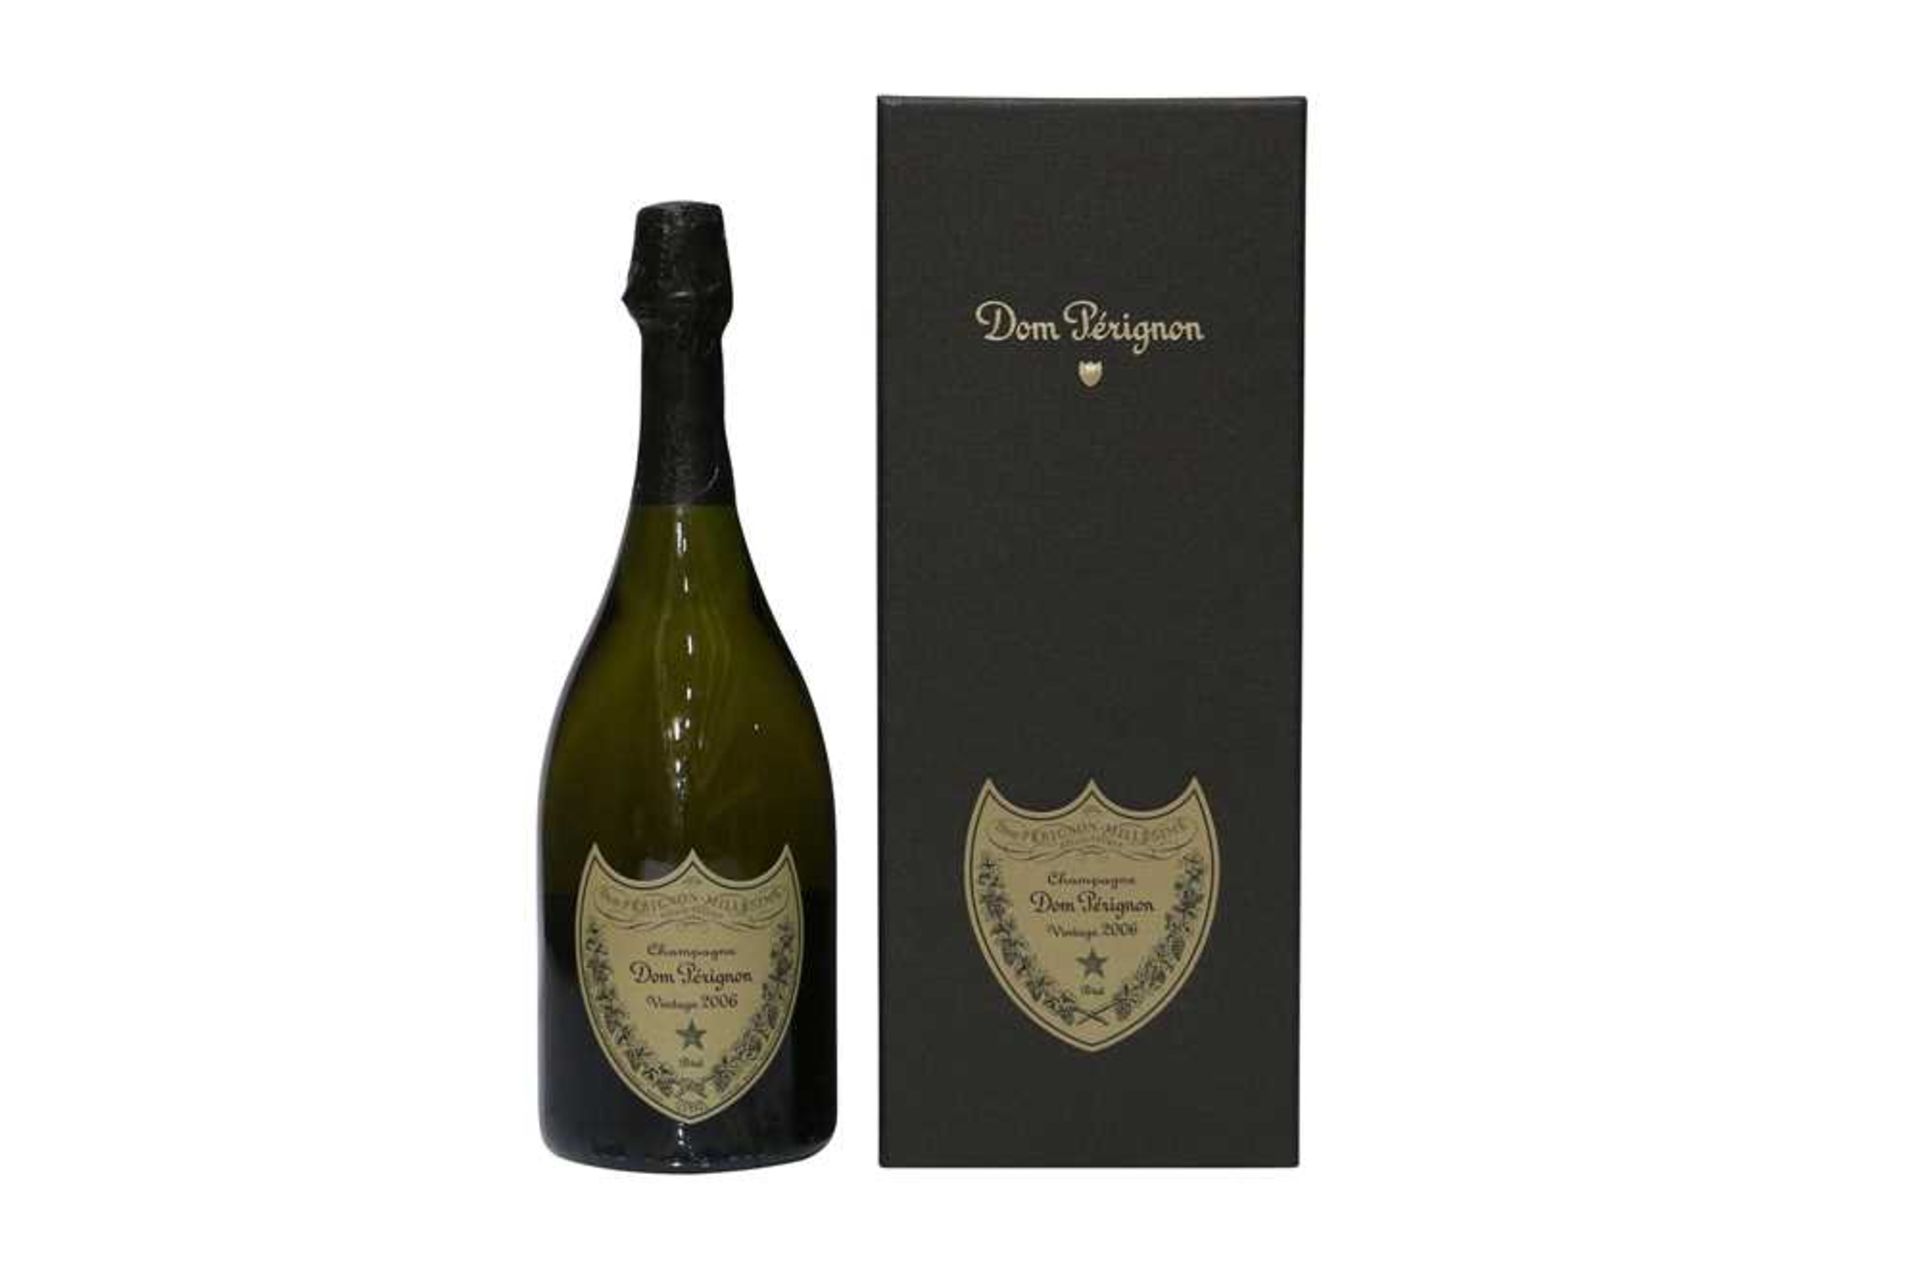 Dom Perignon, Epernay, 2006, one bottle